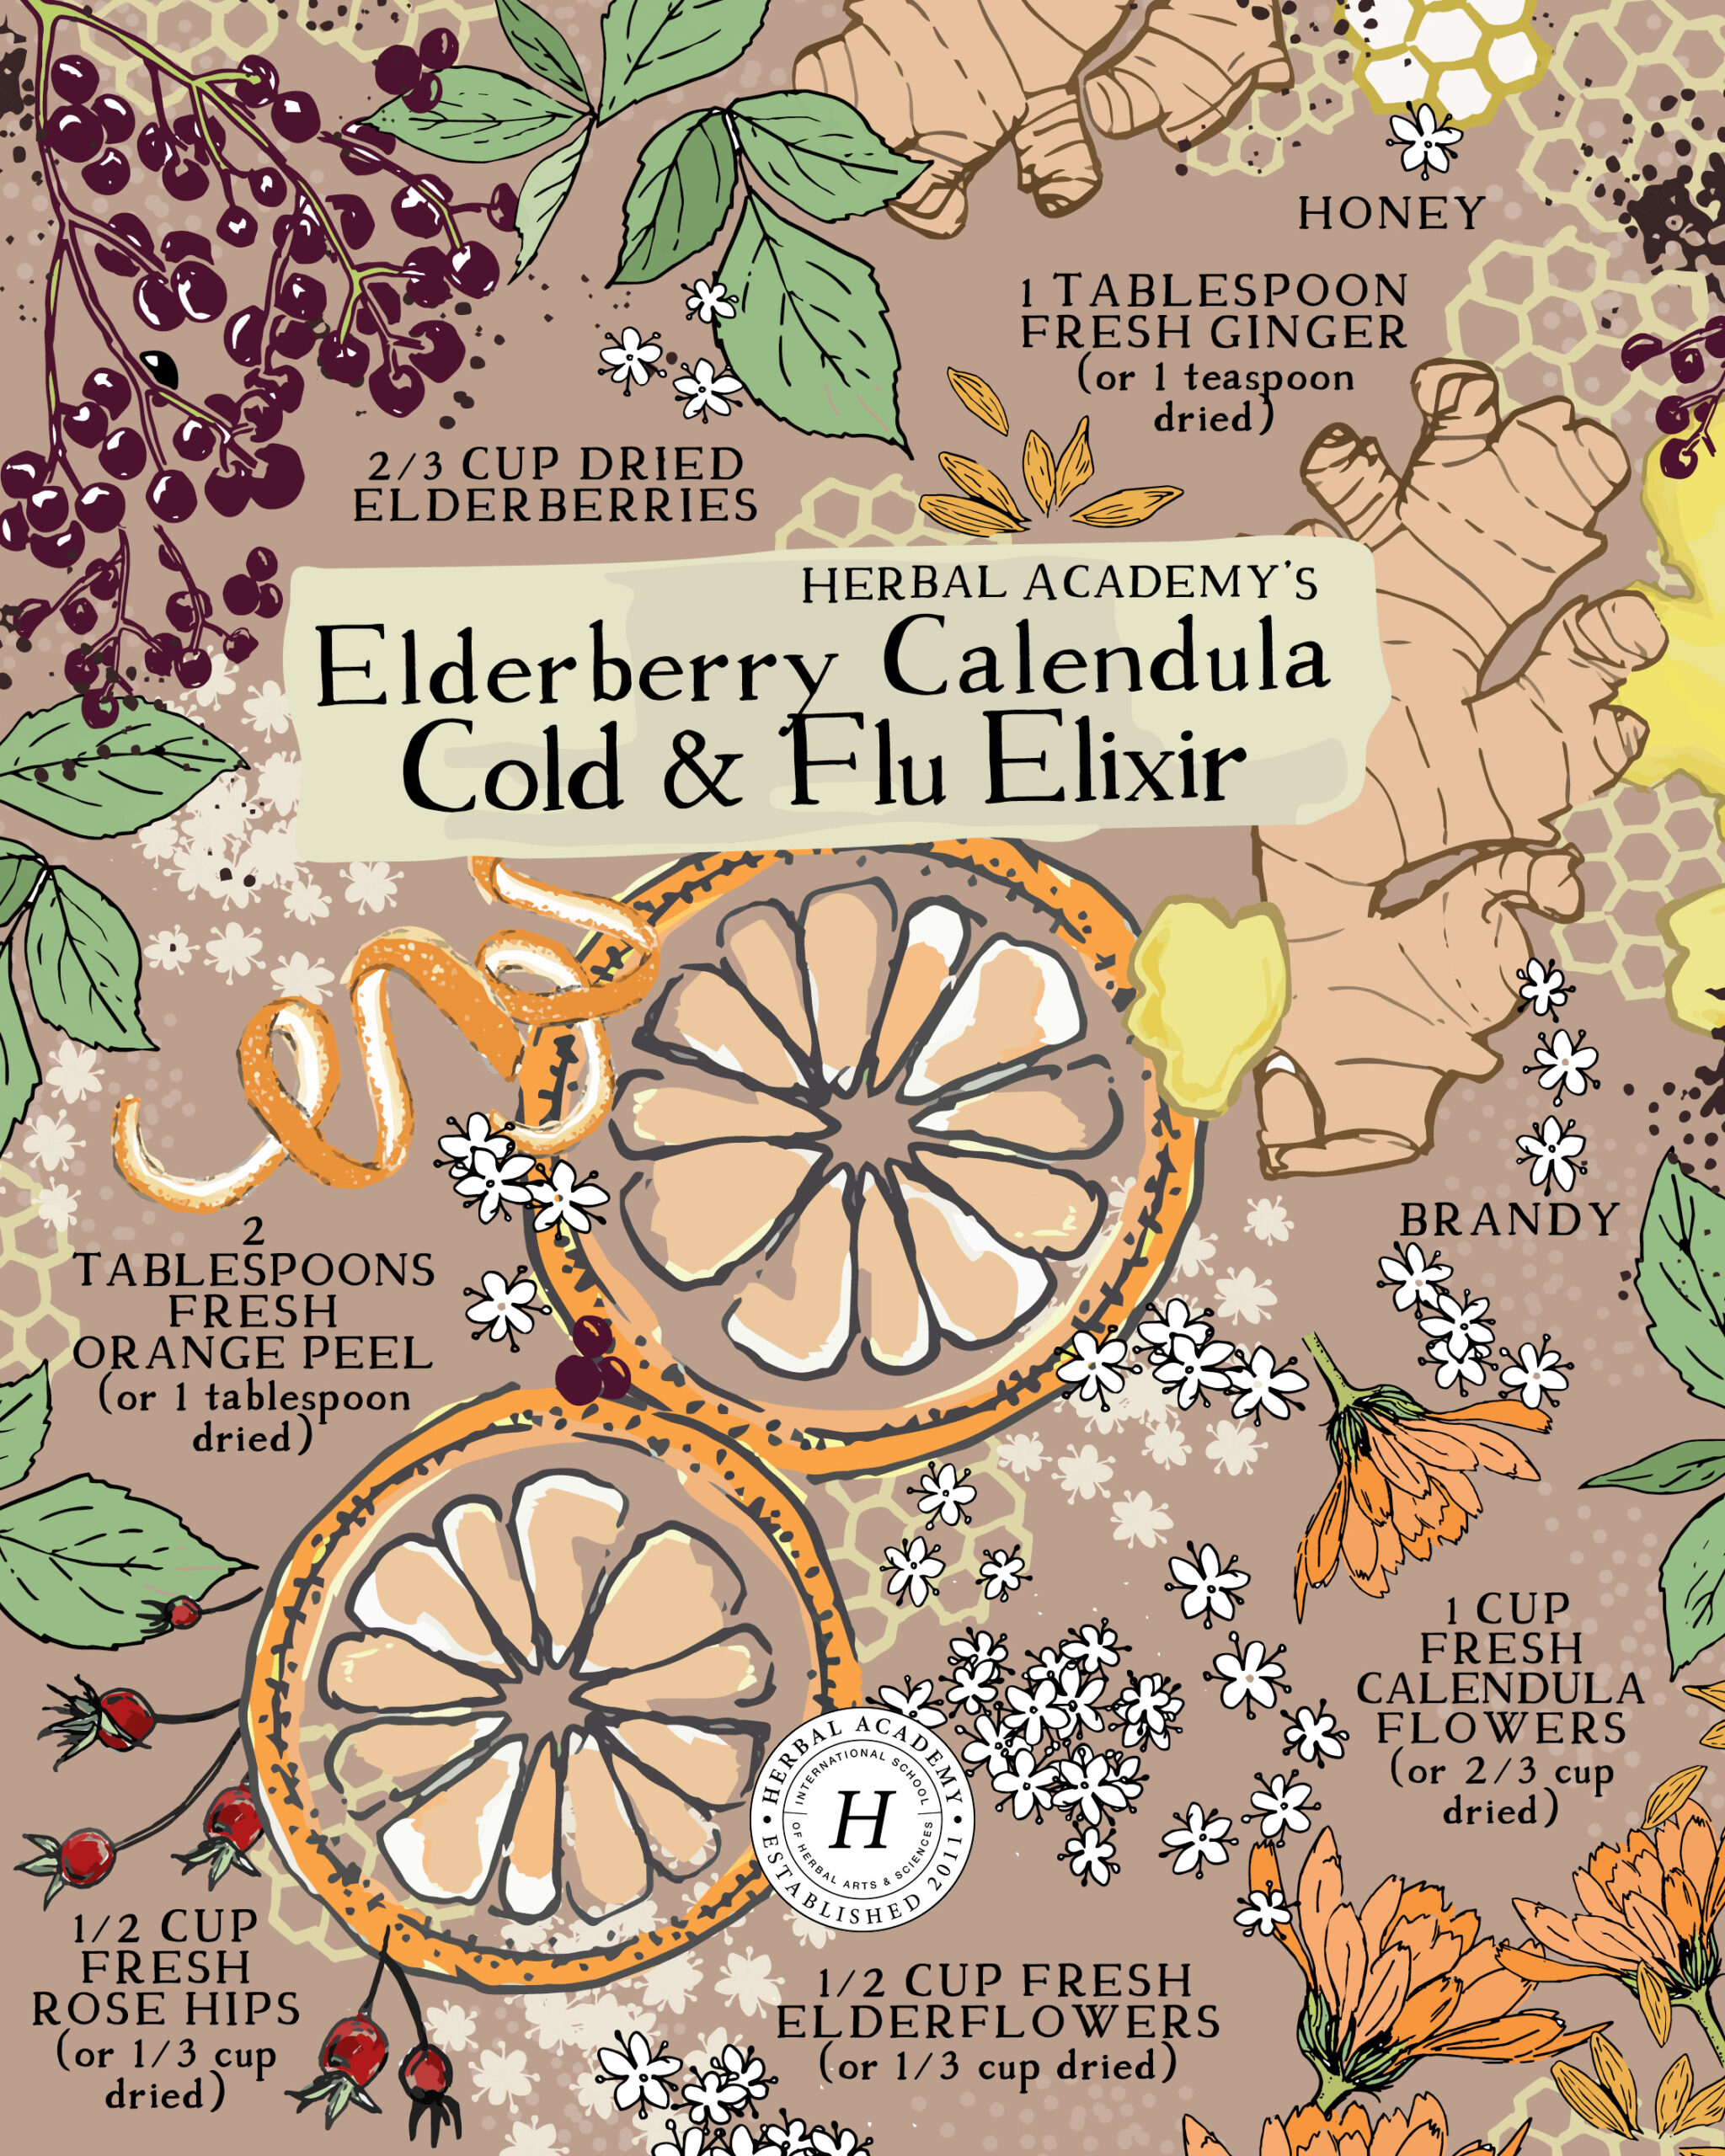 Elderberry Calendula Elixir recipe by Herbal Academy